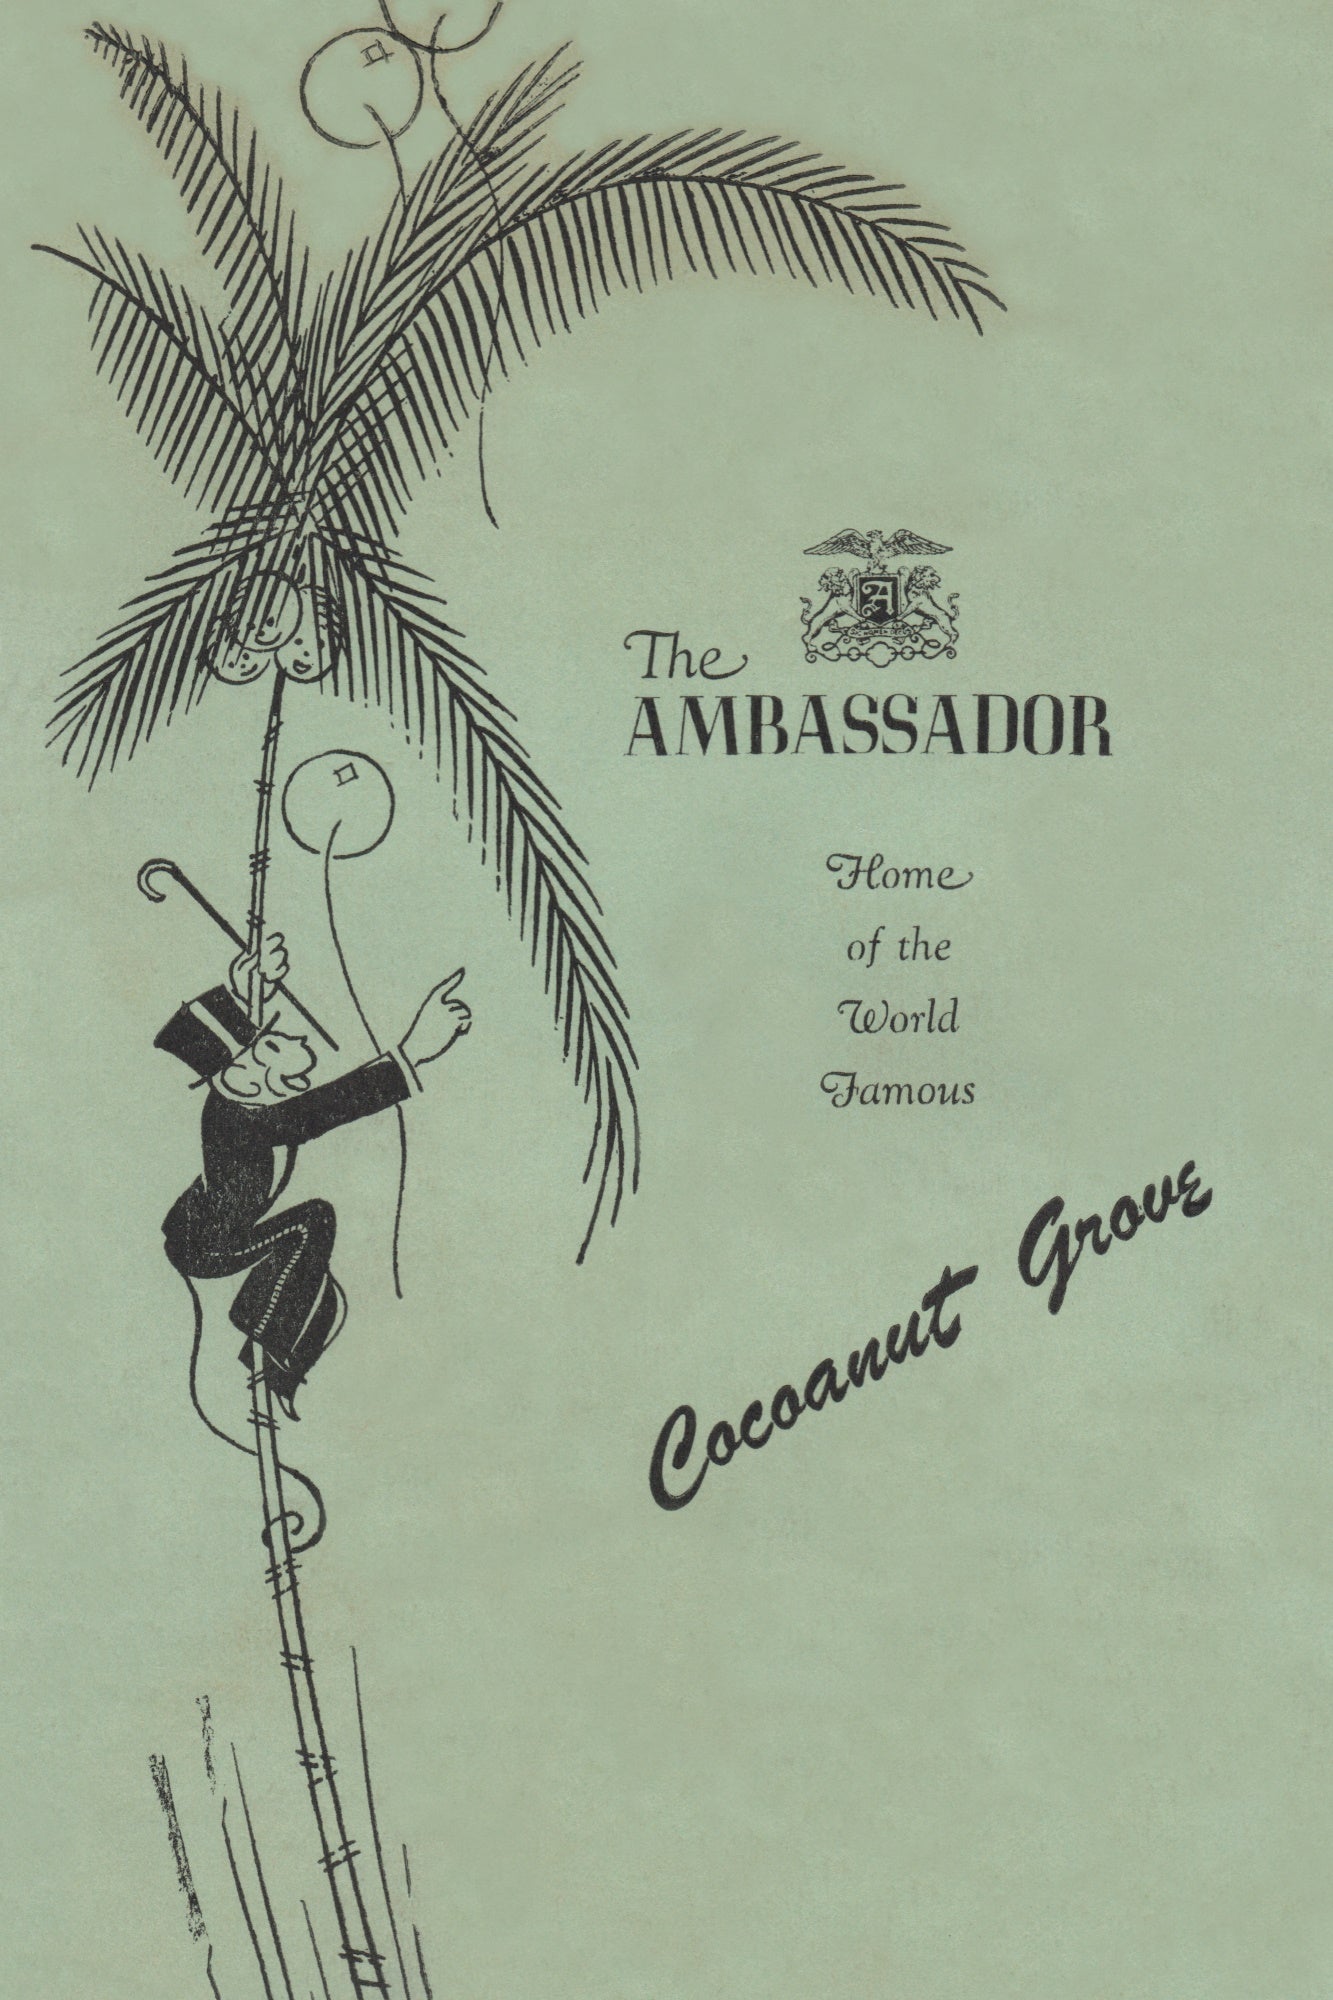 Cocoanut Grove Cocktails, Ambassador Hotel Los Angeles 1930s/40s Menu Art